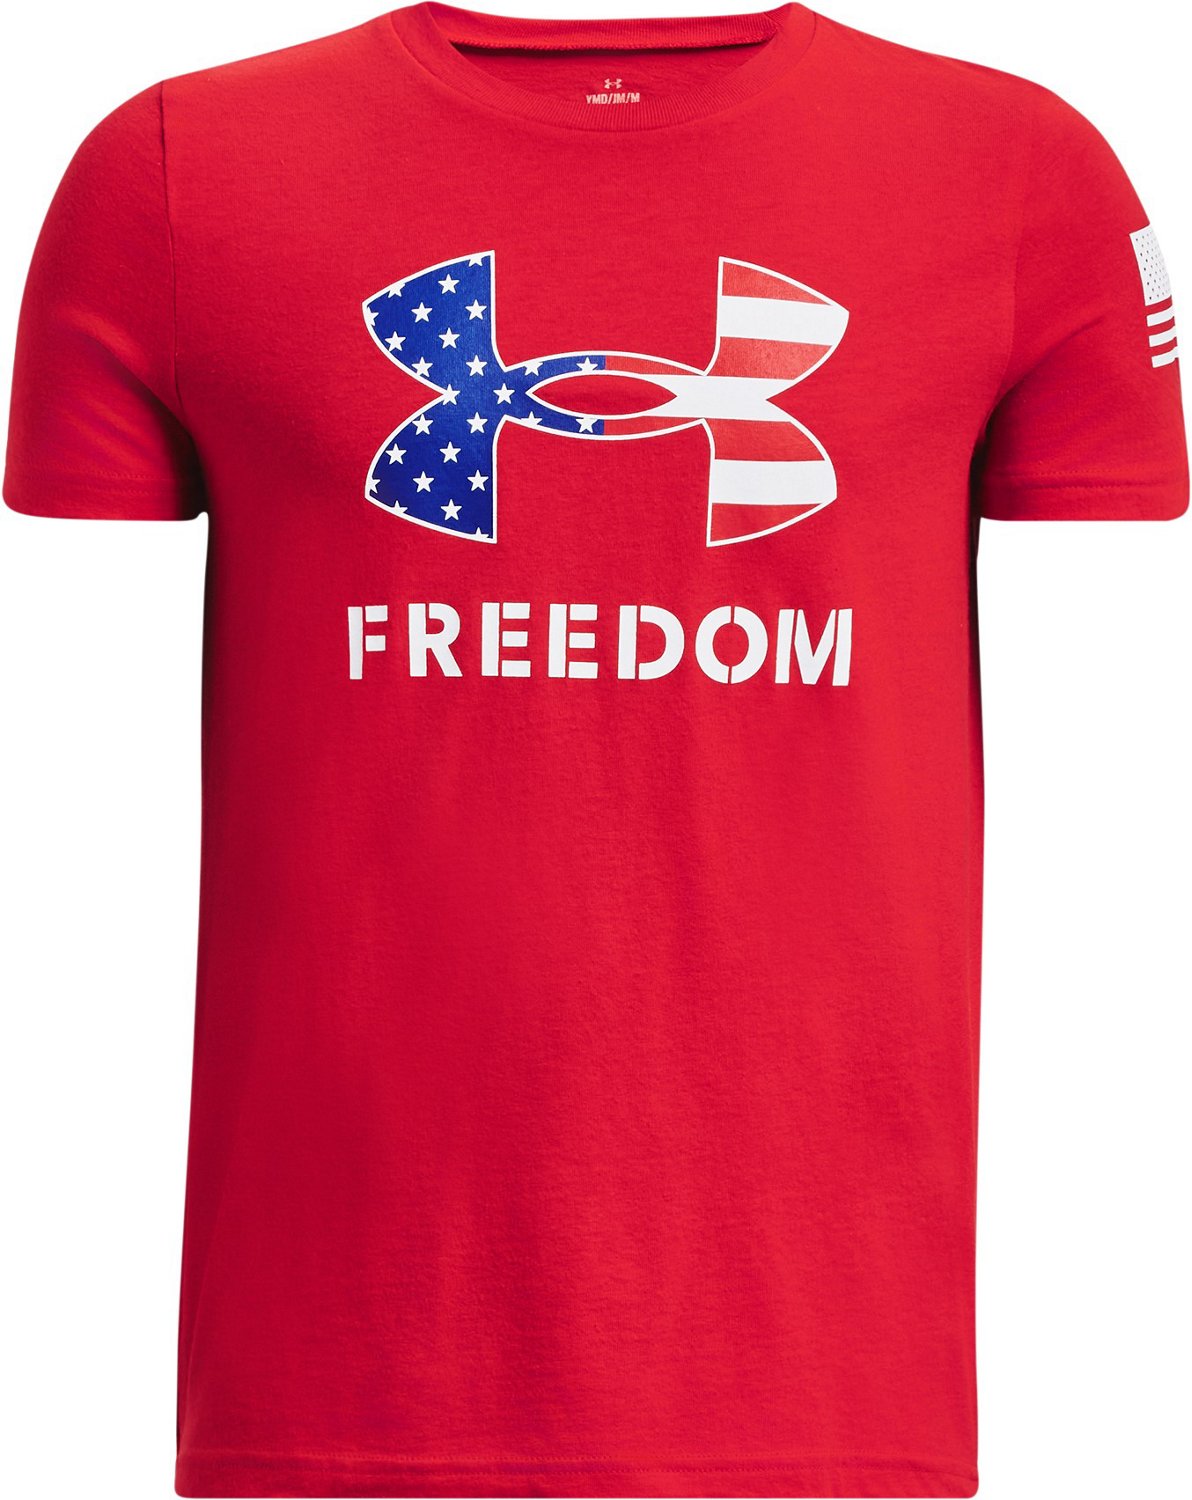 Under Armour Boys' Freedom Logo T-shirt